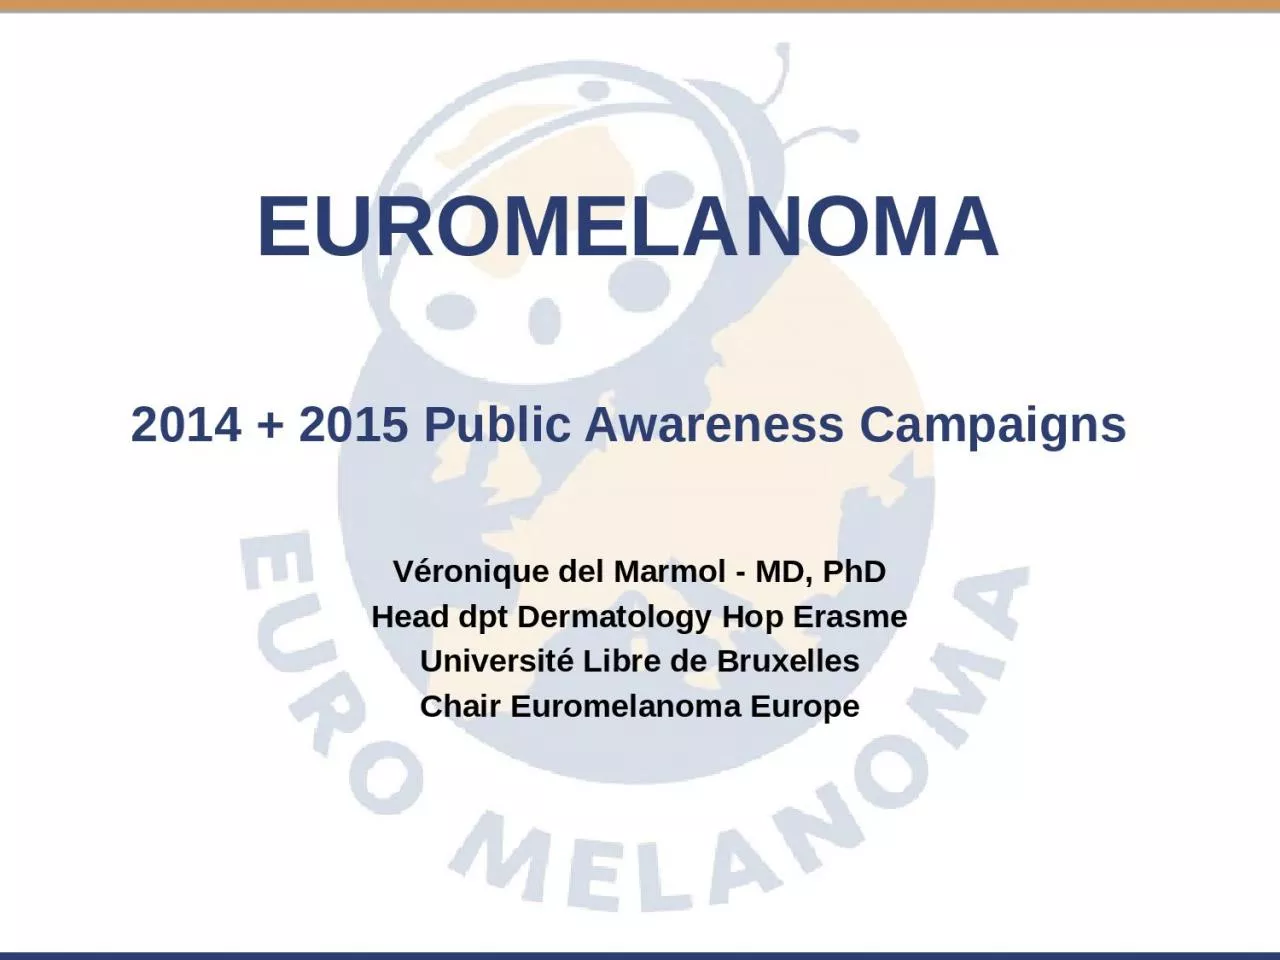 EUROMELANOMA 2014 + 2015 Public Awareness Campaigns